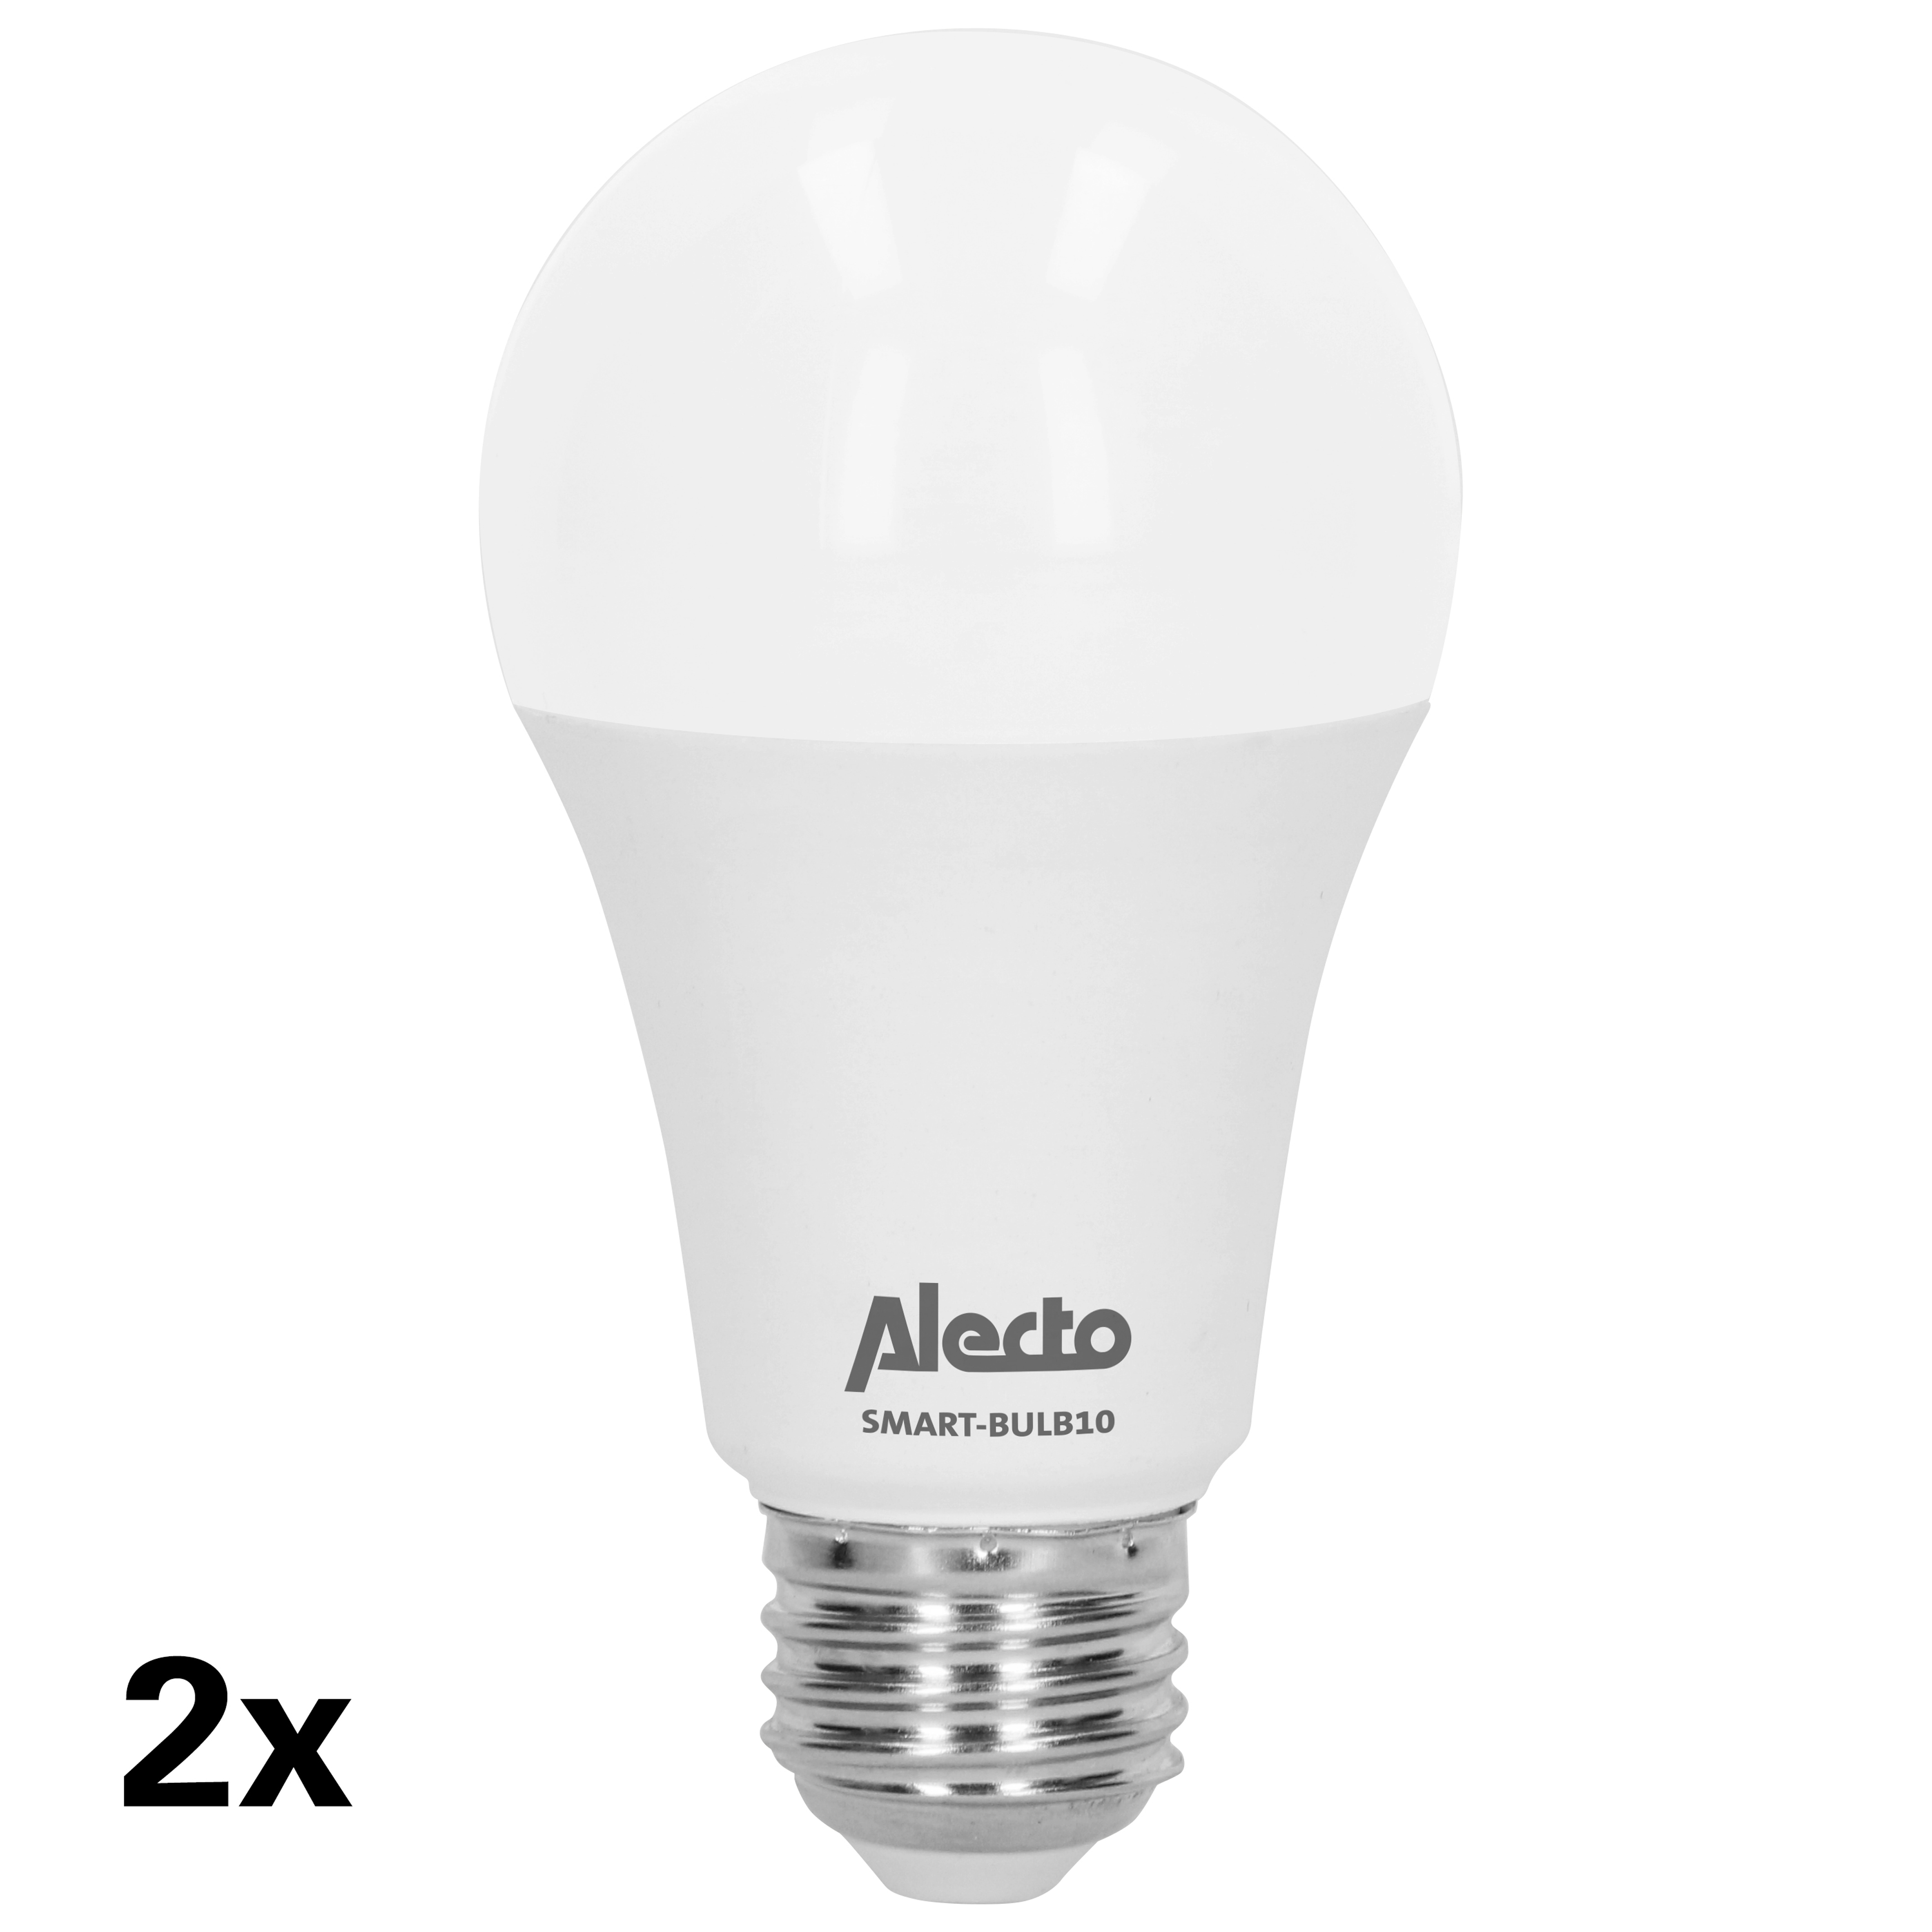 Kaltes ALECTO E27-Sockel Weiß,Neutrales Pack - SMART-BULB10 DUO Weiß,Warmes Weiß 2er warmes Weiß,RGB,Sehr smarte,mehrfarbige mit WLAN-LED-Glühlampen